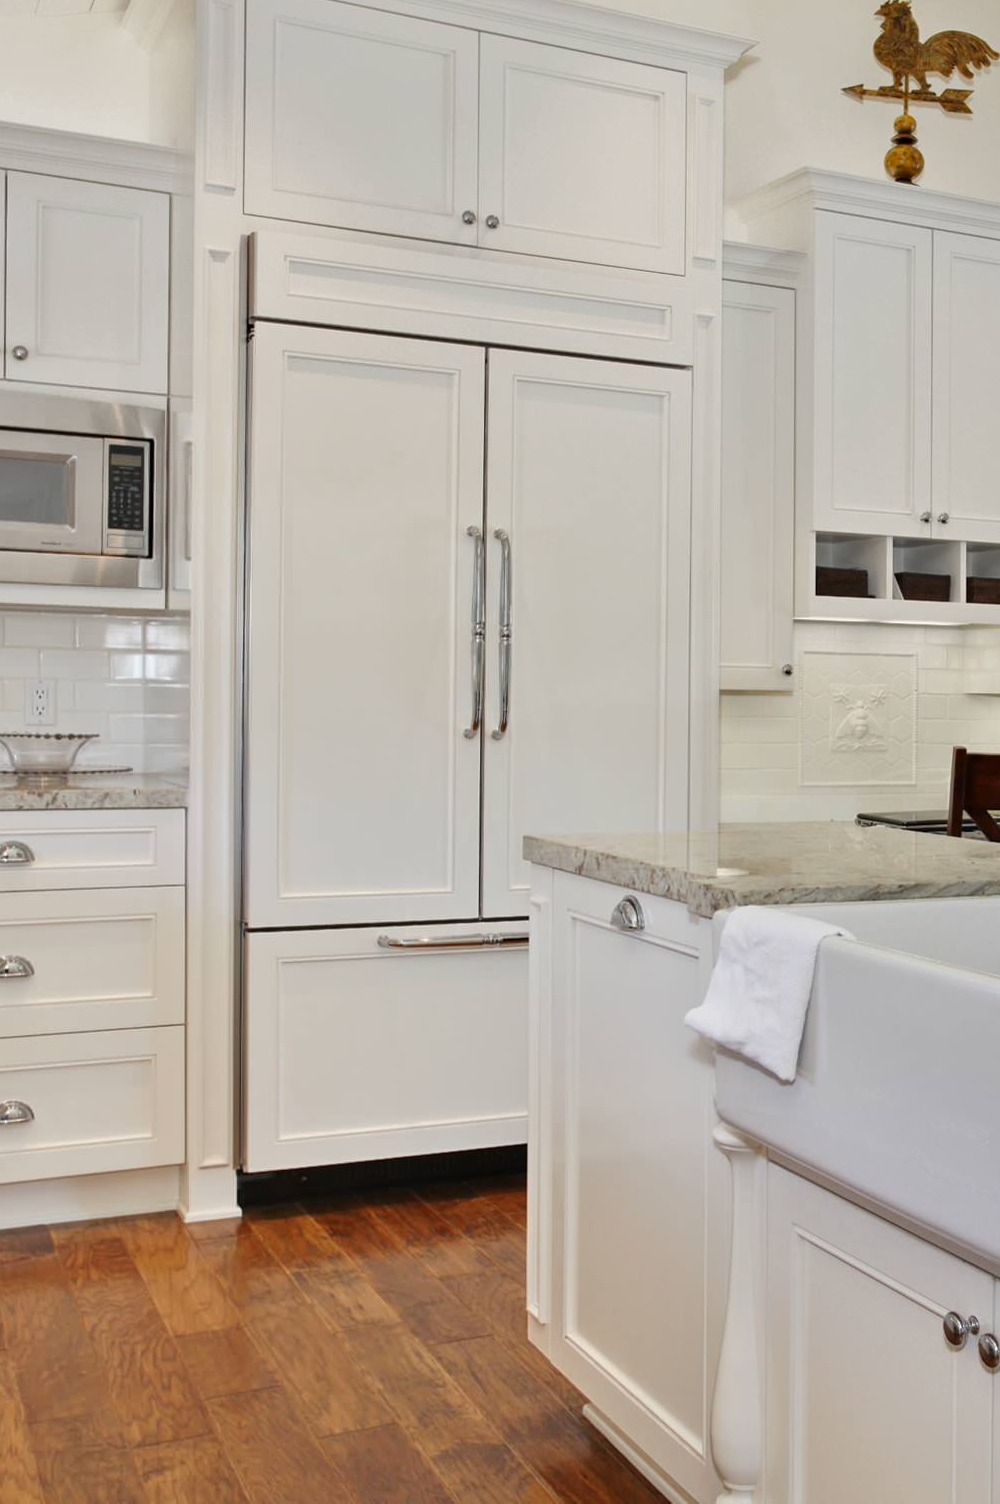 White Granite Countertop Cabinet Subway Tile Backsplash Dark Hardwood Floor Farmhouse Sink